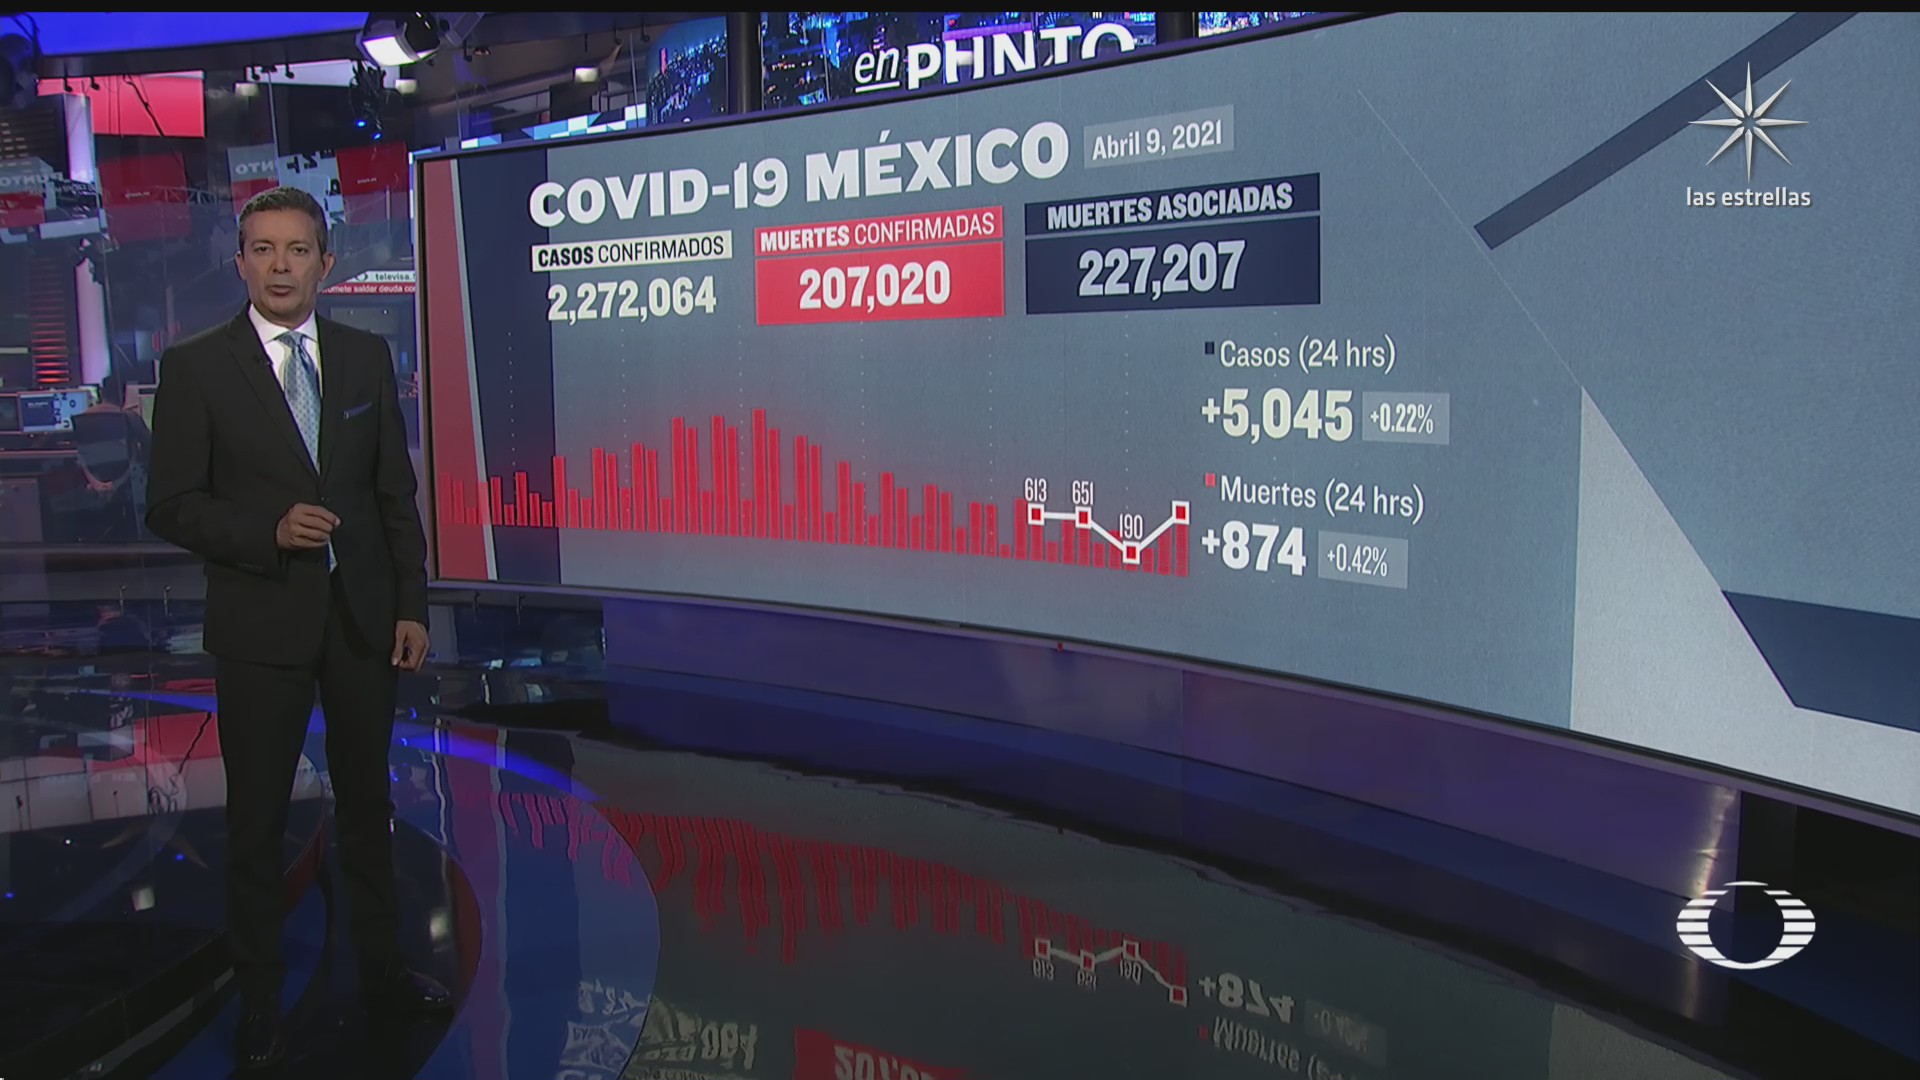 suman 207 mil 20 muertos por coronavirus en mexico